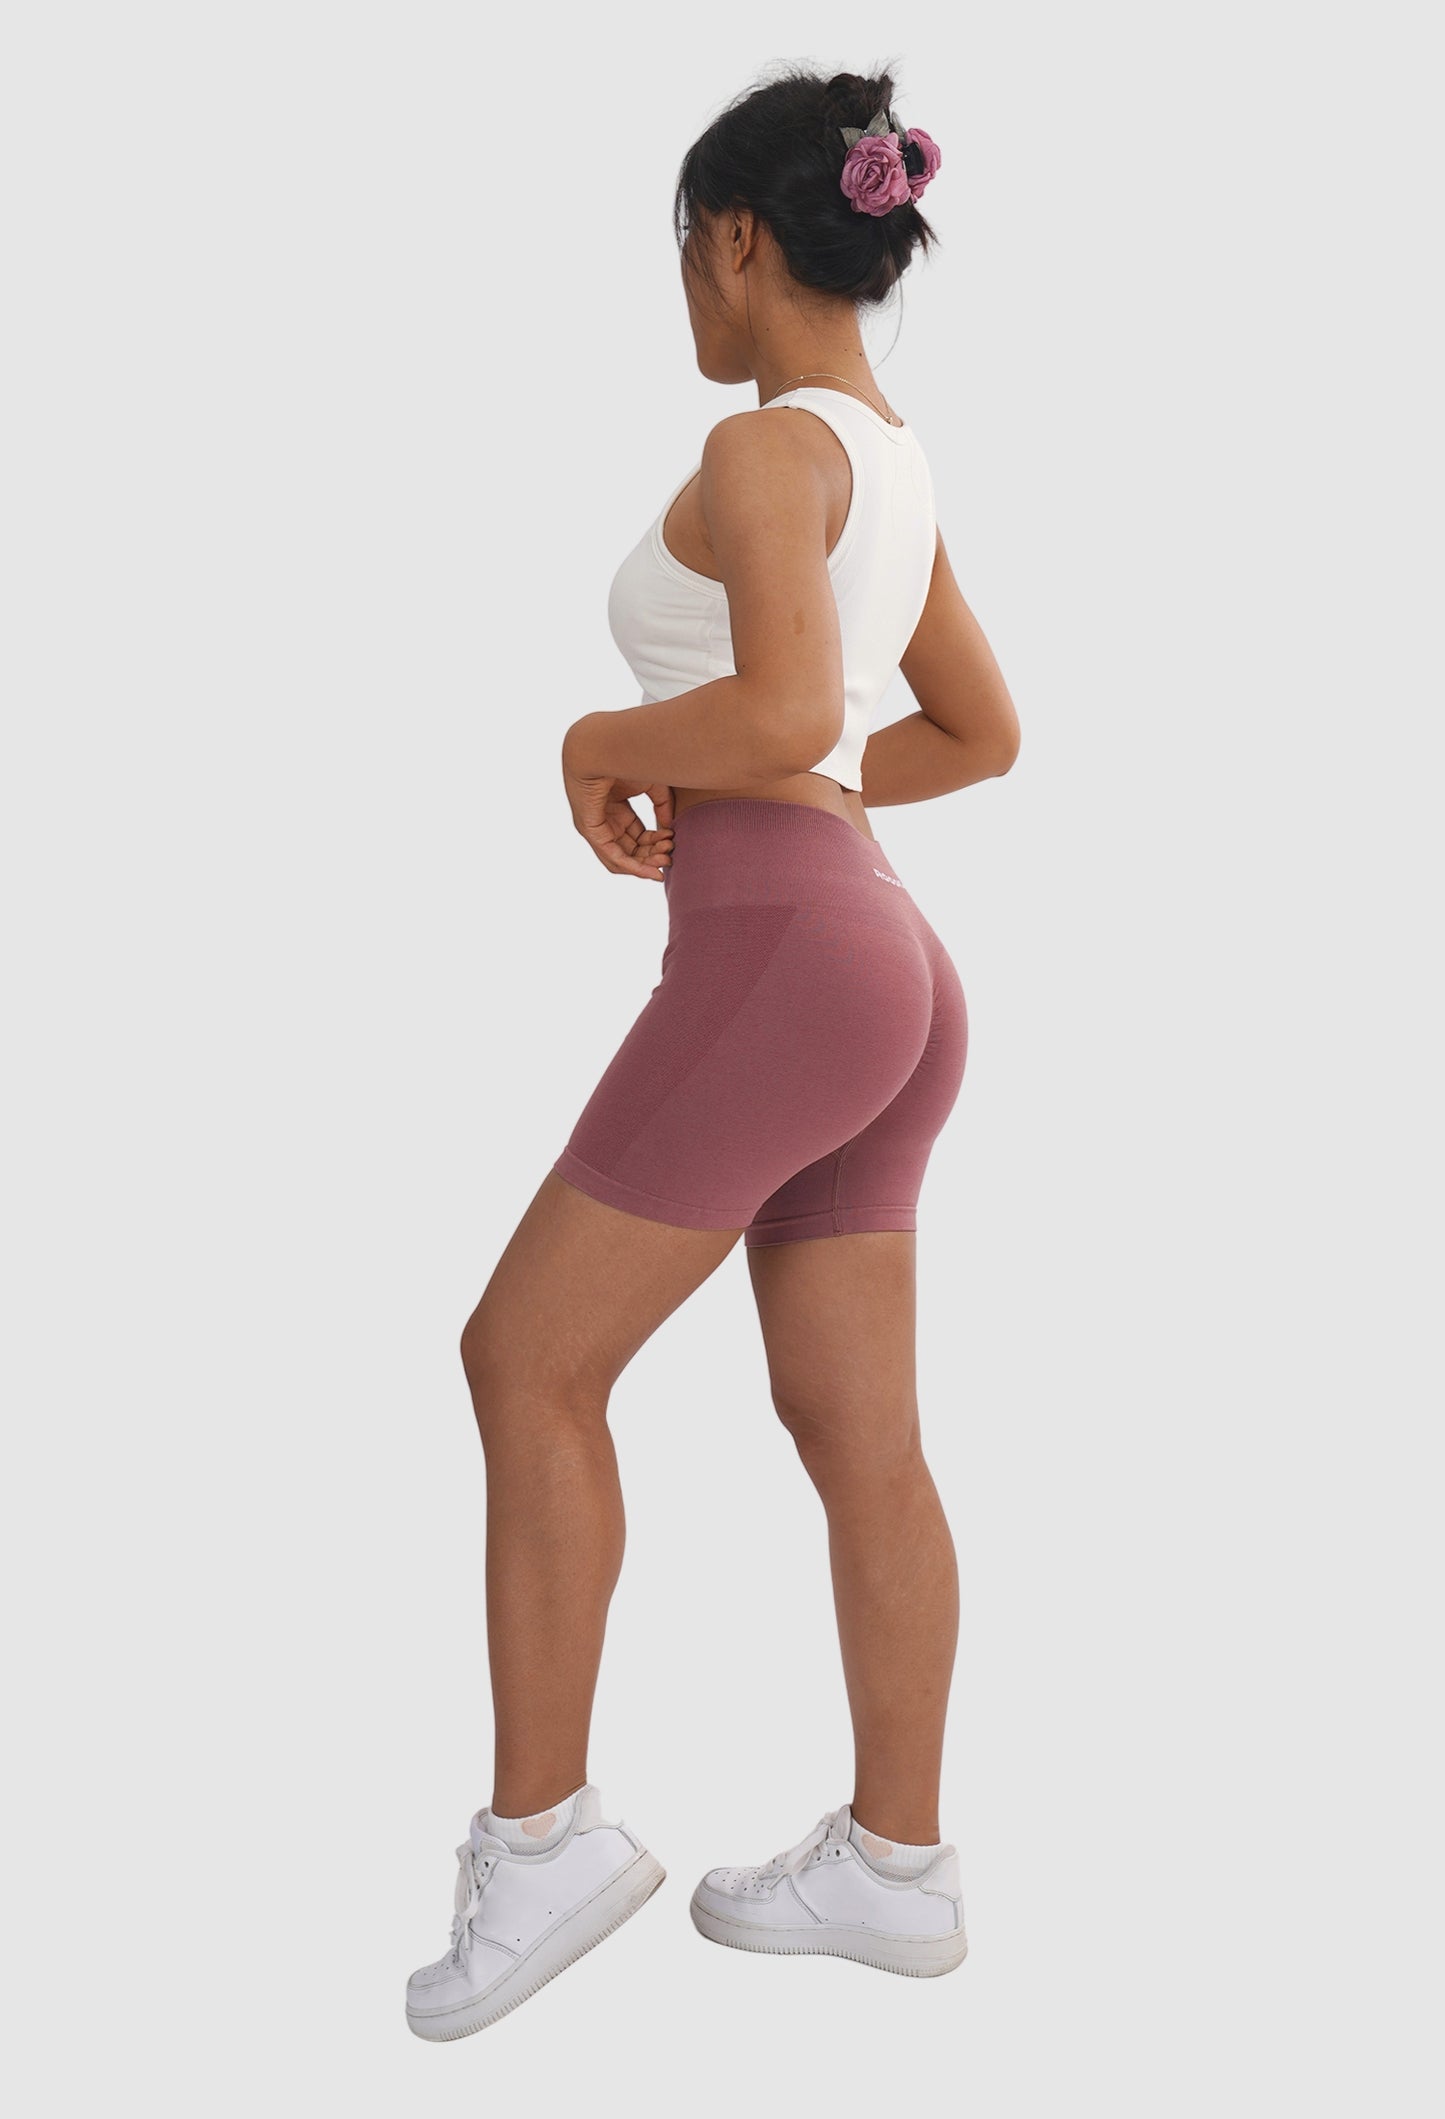 ROOOKU Uplift Squat Proof Workout Leggings for Women Anti-Ripped Scrunch  Butt Lifting Gym Booty Seamless Yoga Pants-Brick Orange